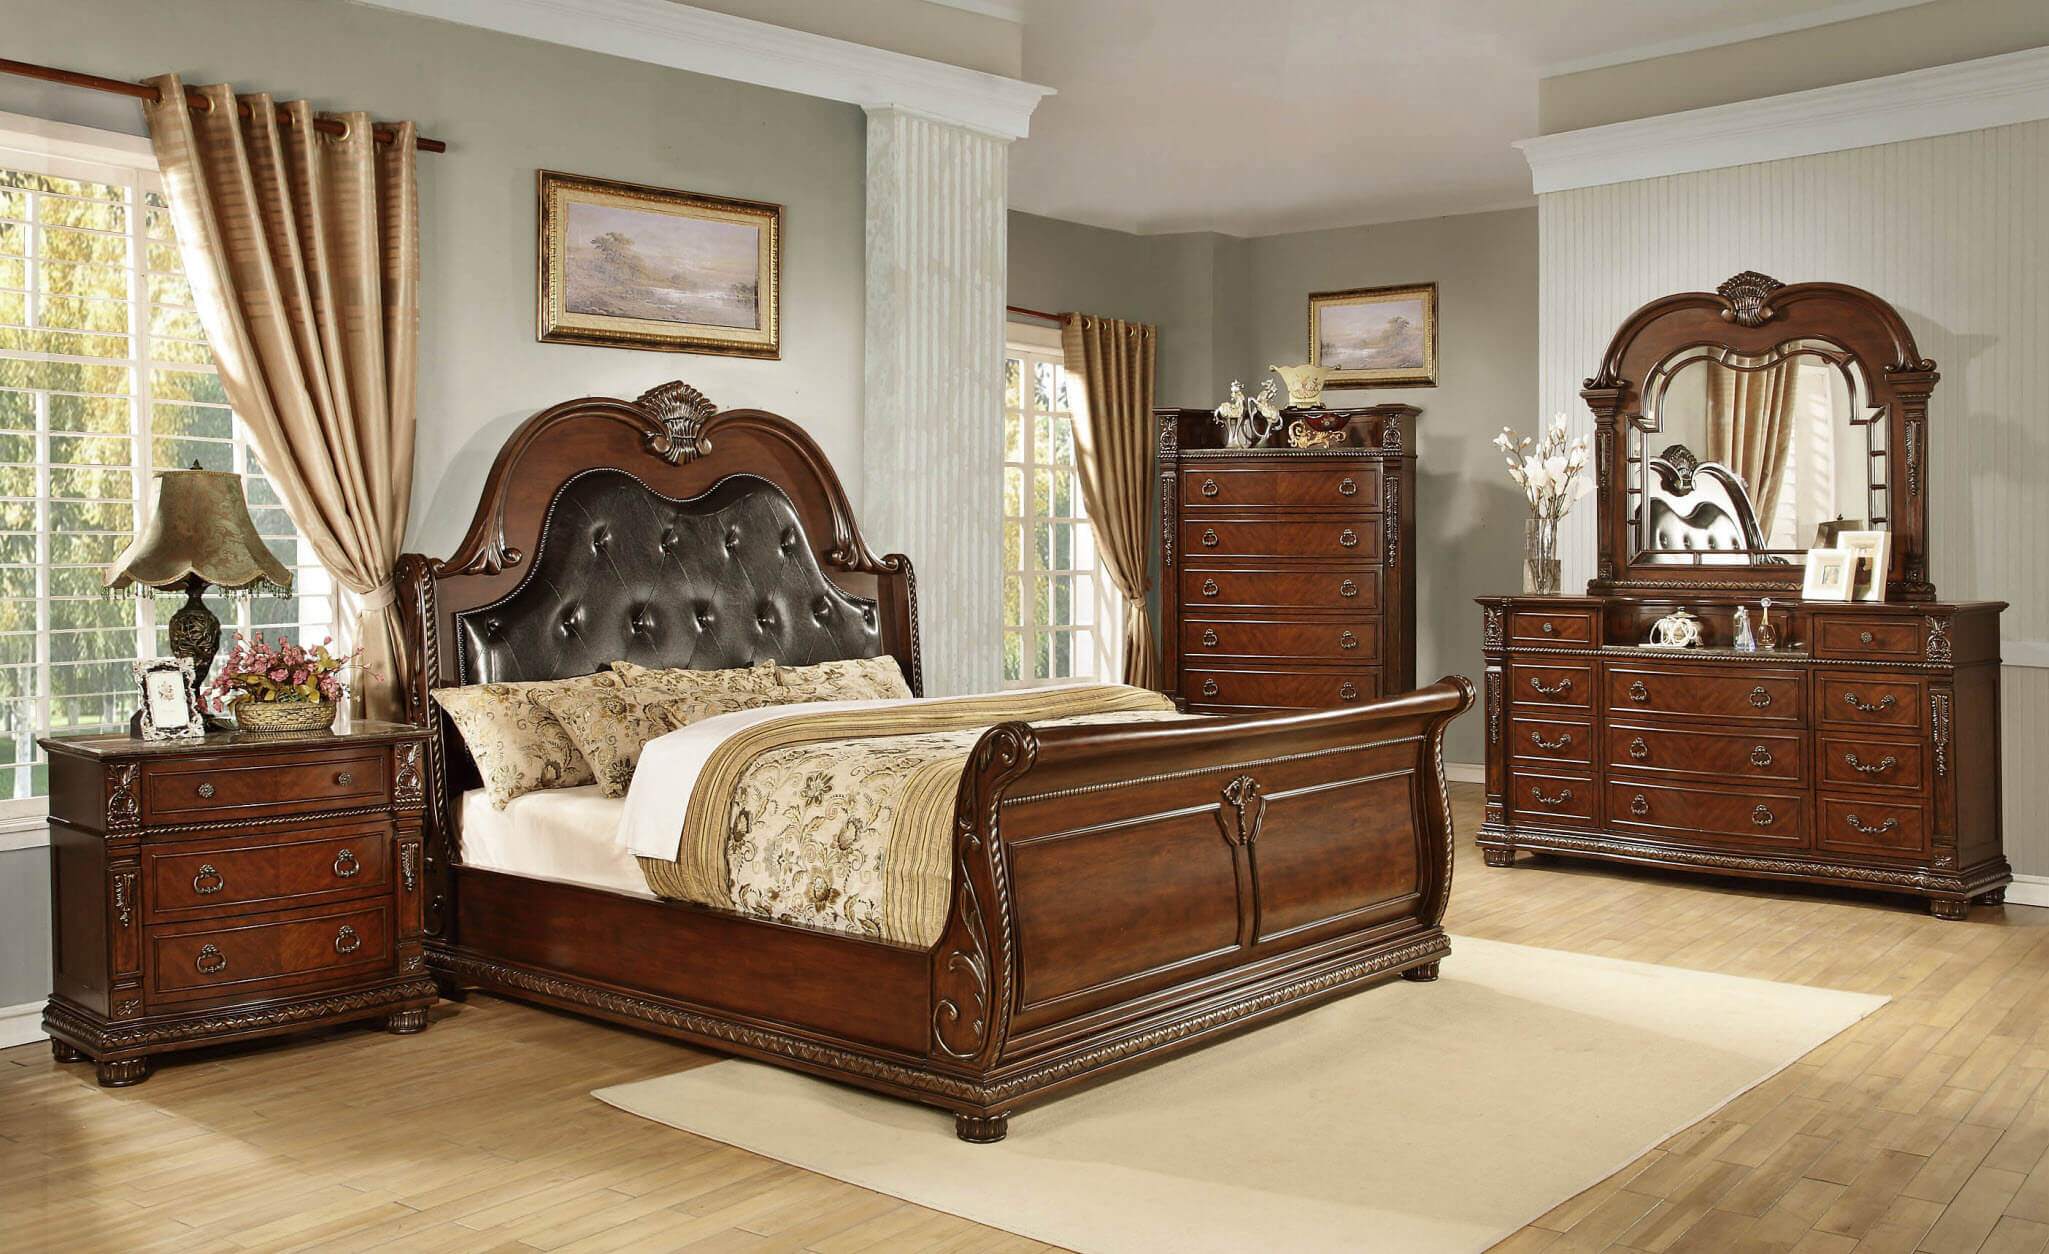 Palace Marble Top Bedroom Set Bedroom Furniture Sets inside sizing 2049 X 1254